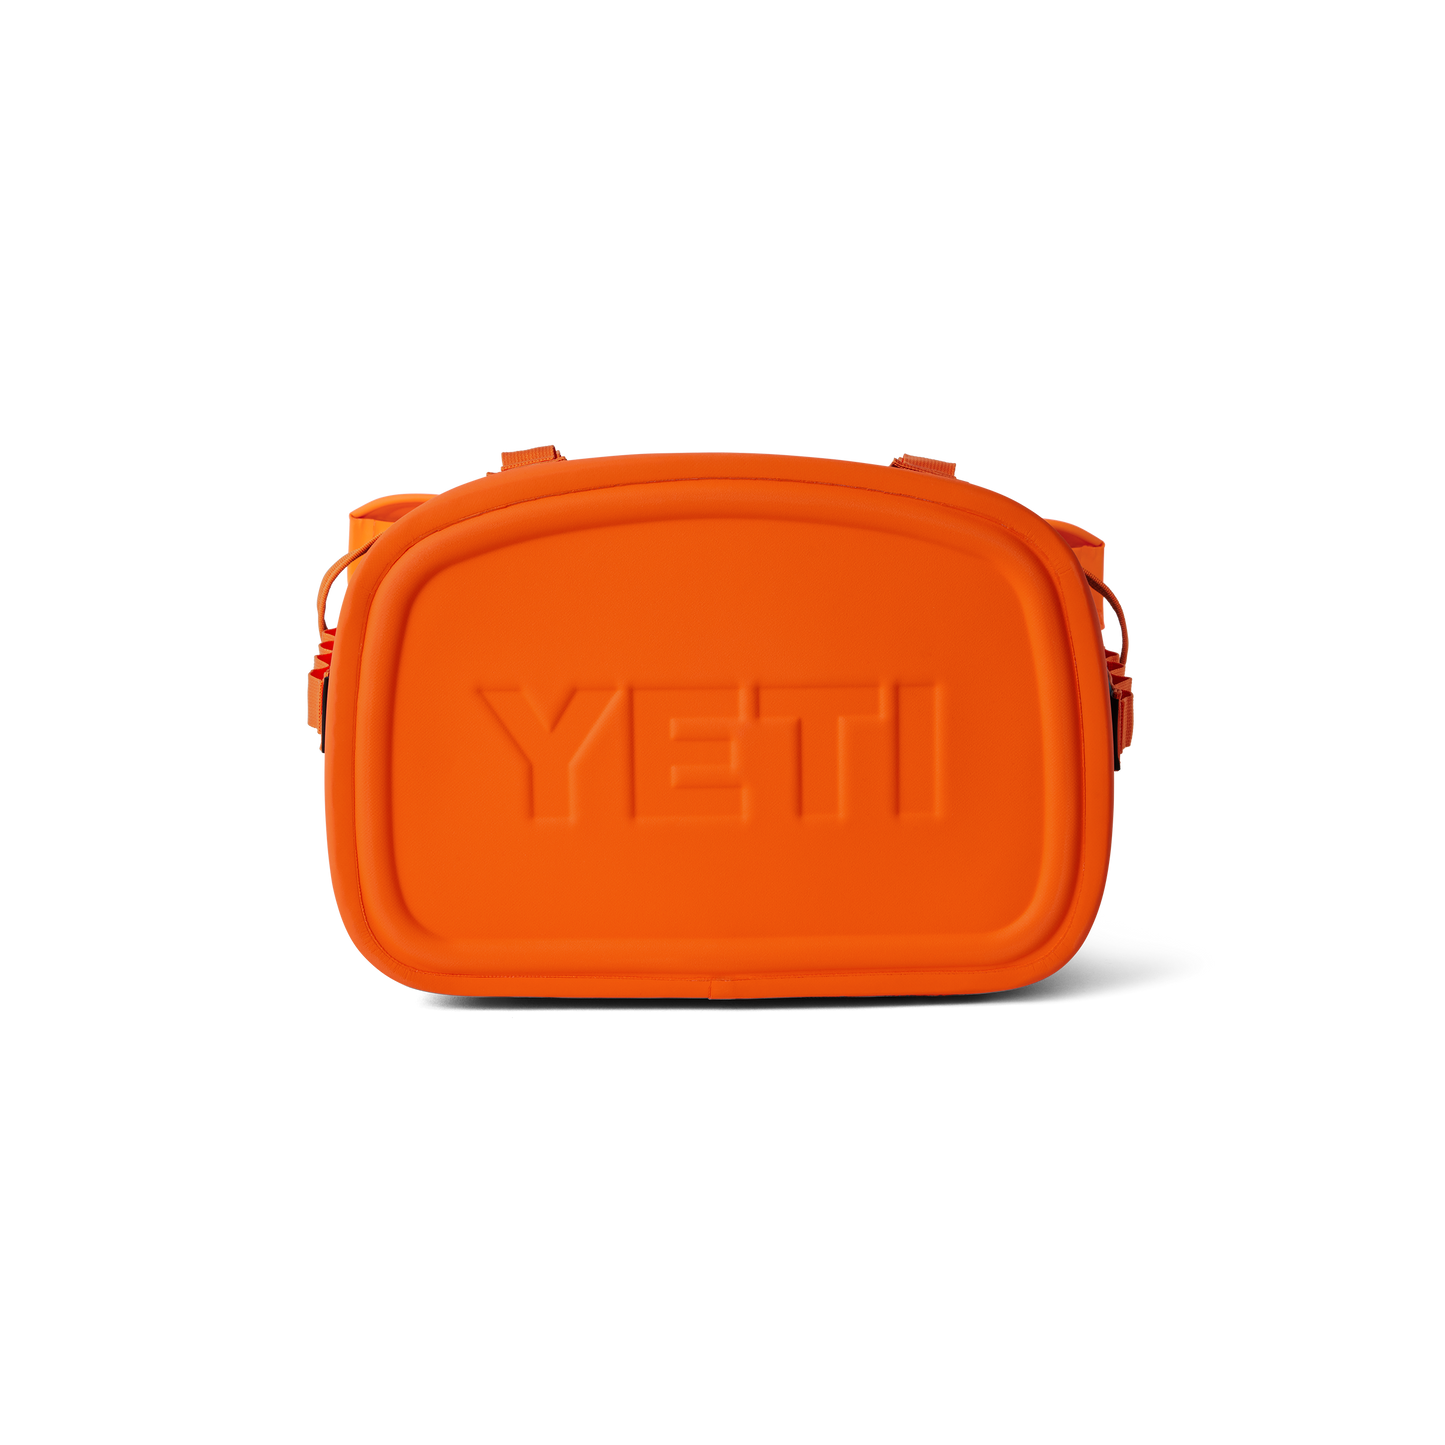 YETI Hopper® M20 Soft Backpack Cooler Crossover